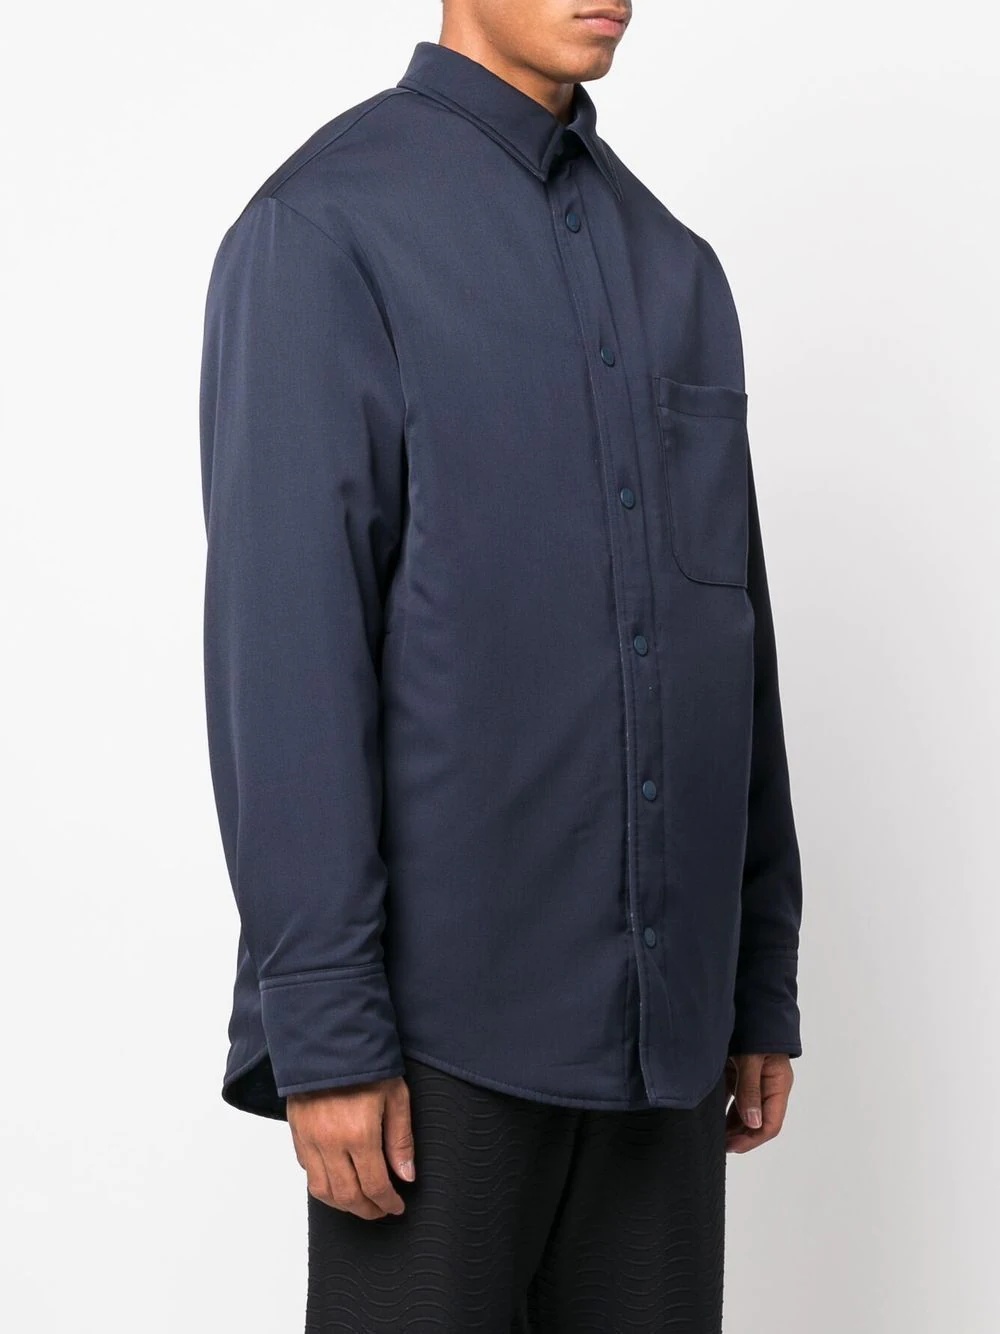 virgin-wool shirt jacket - 3